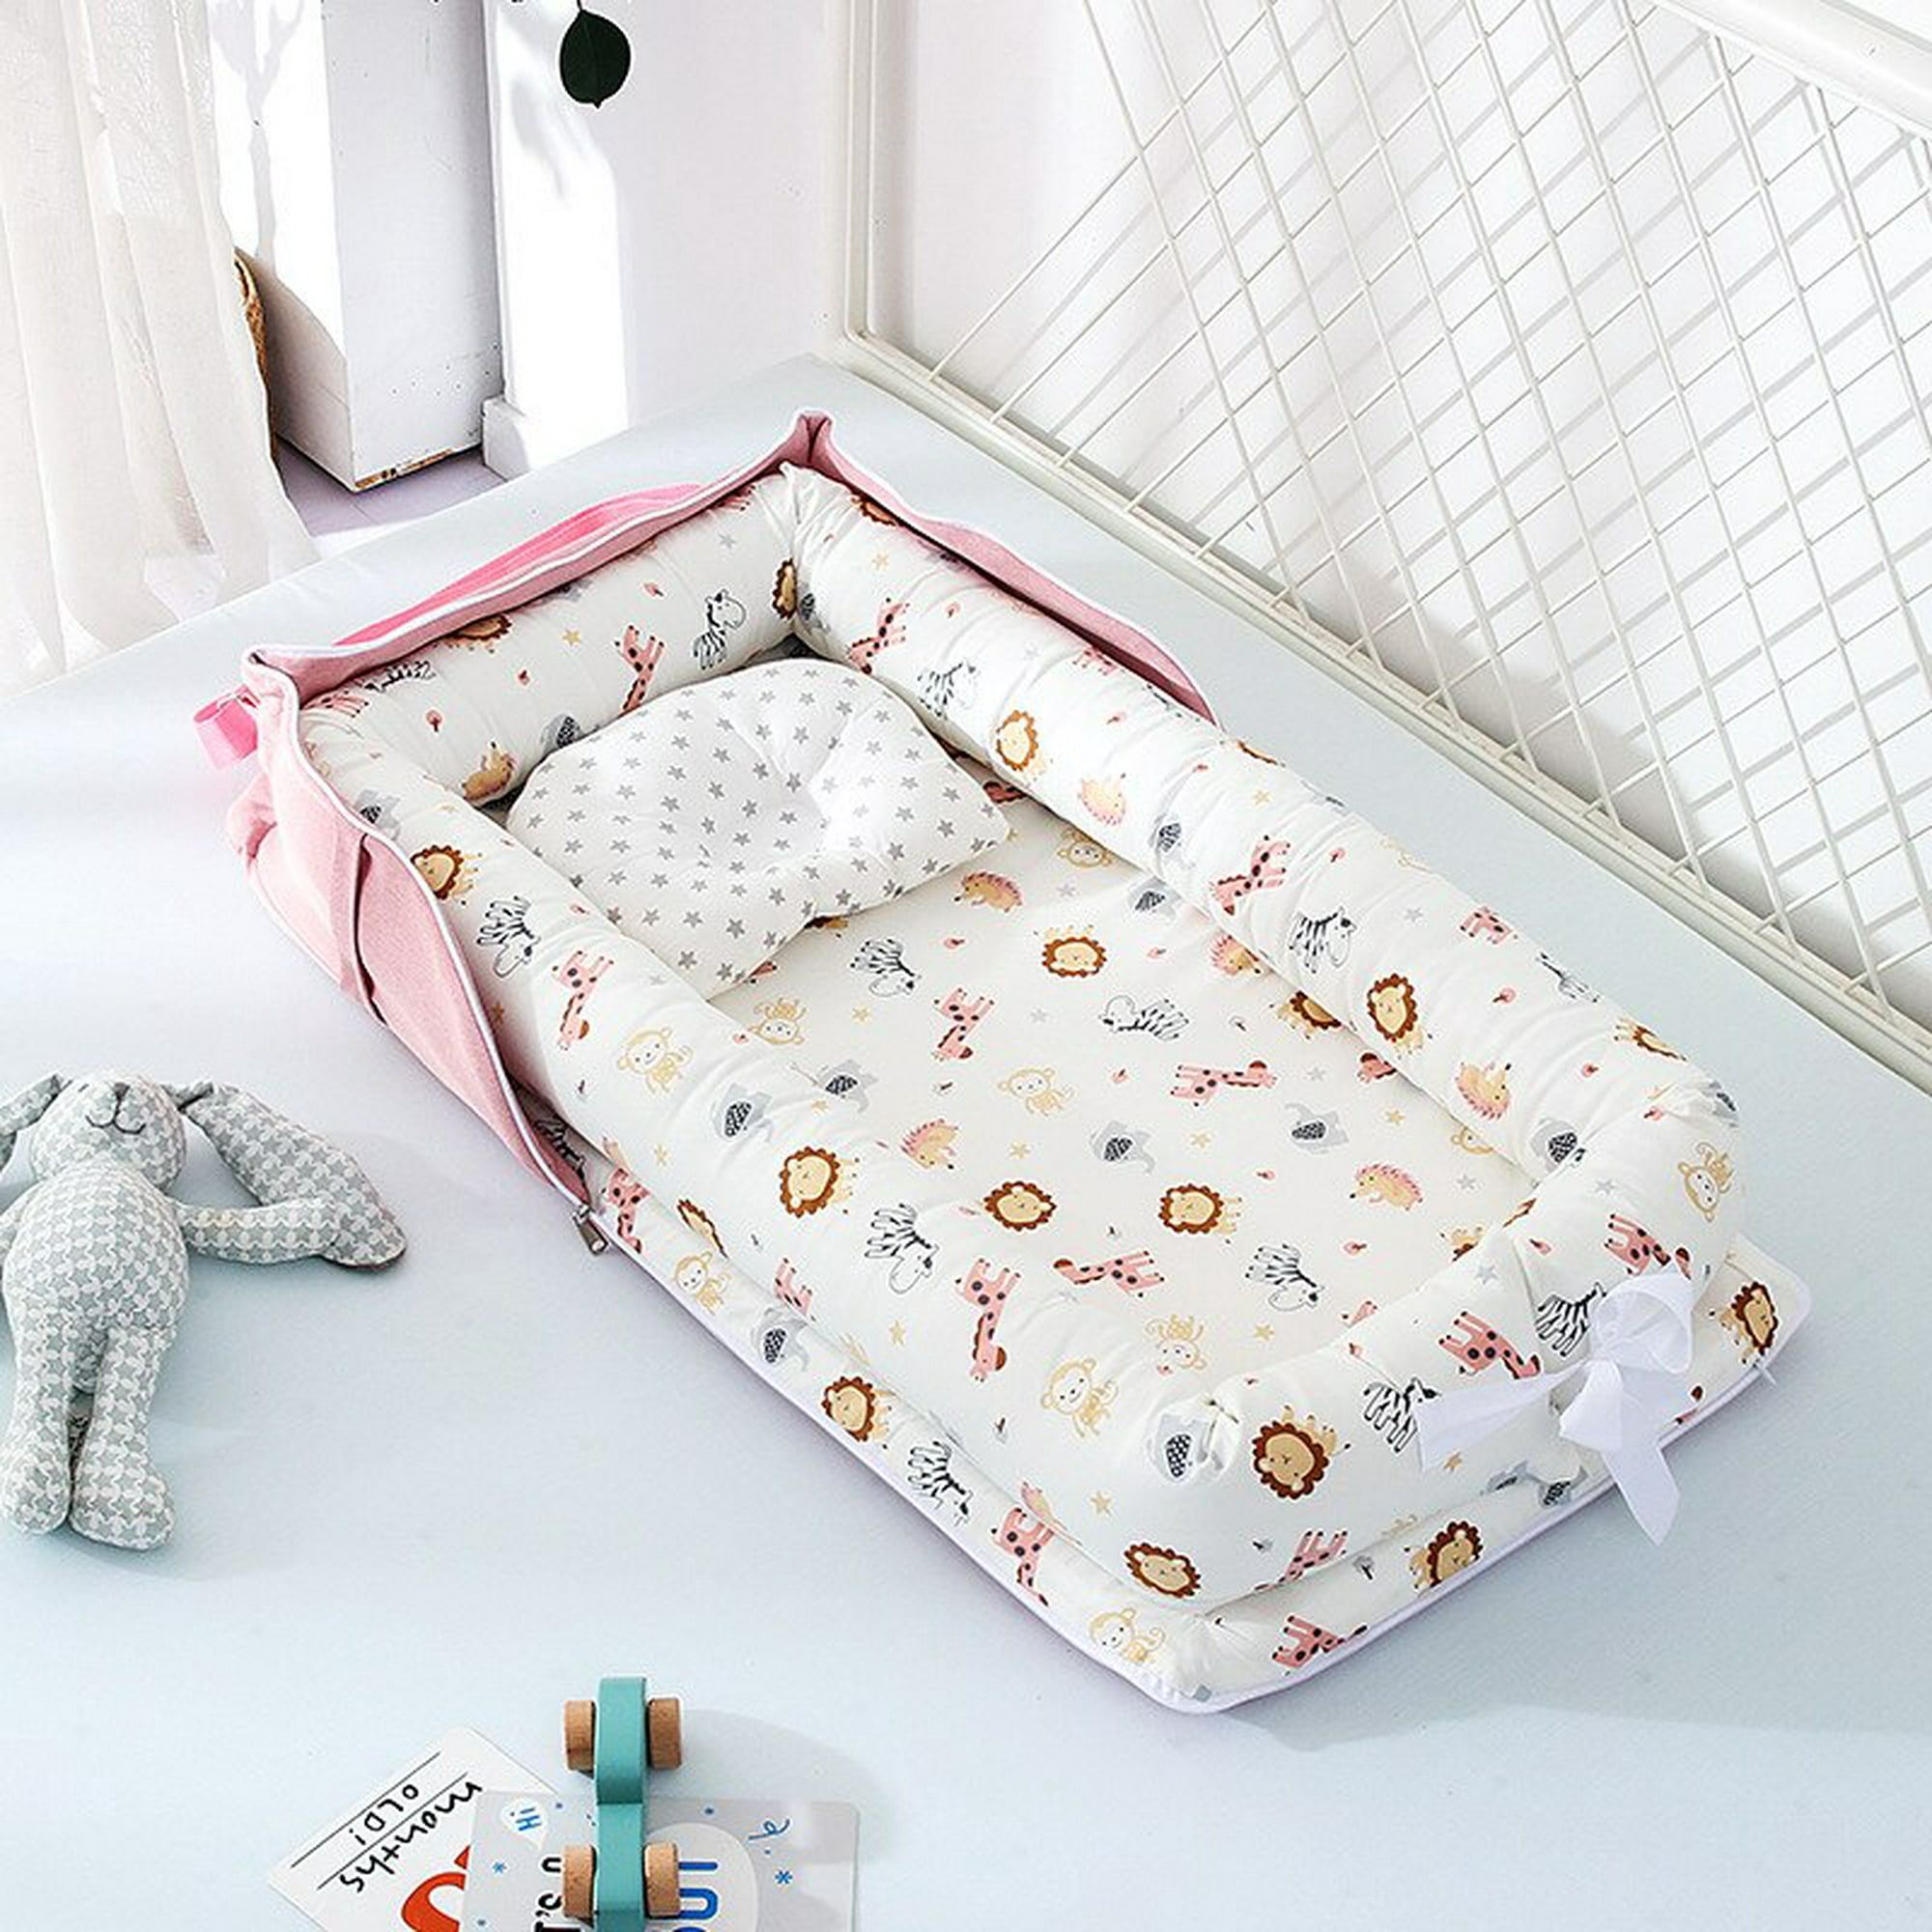 Cama Cuna Blanca 994 - Falabella.com  Cribs, Newborn baby bedding, Baby  bedding sets